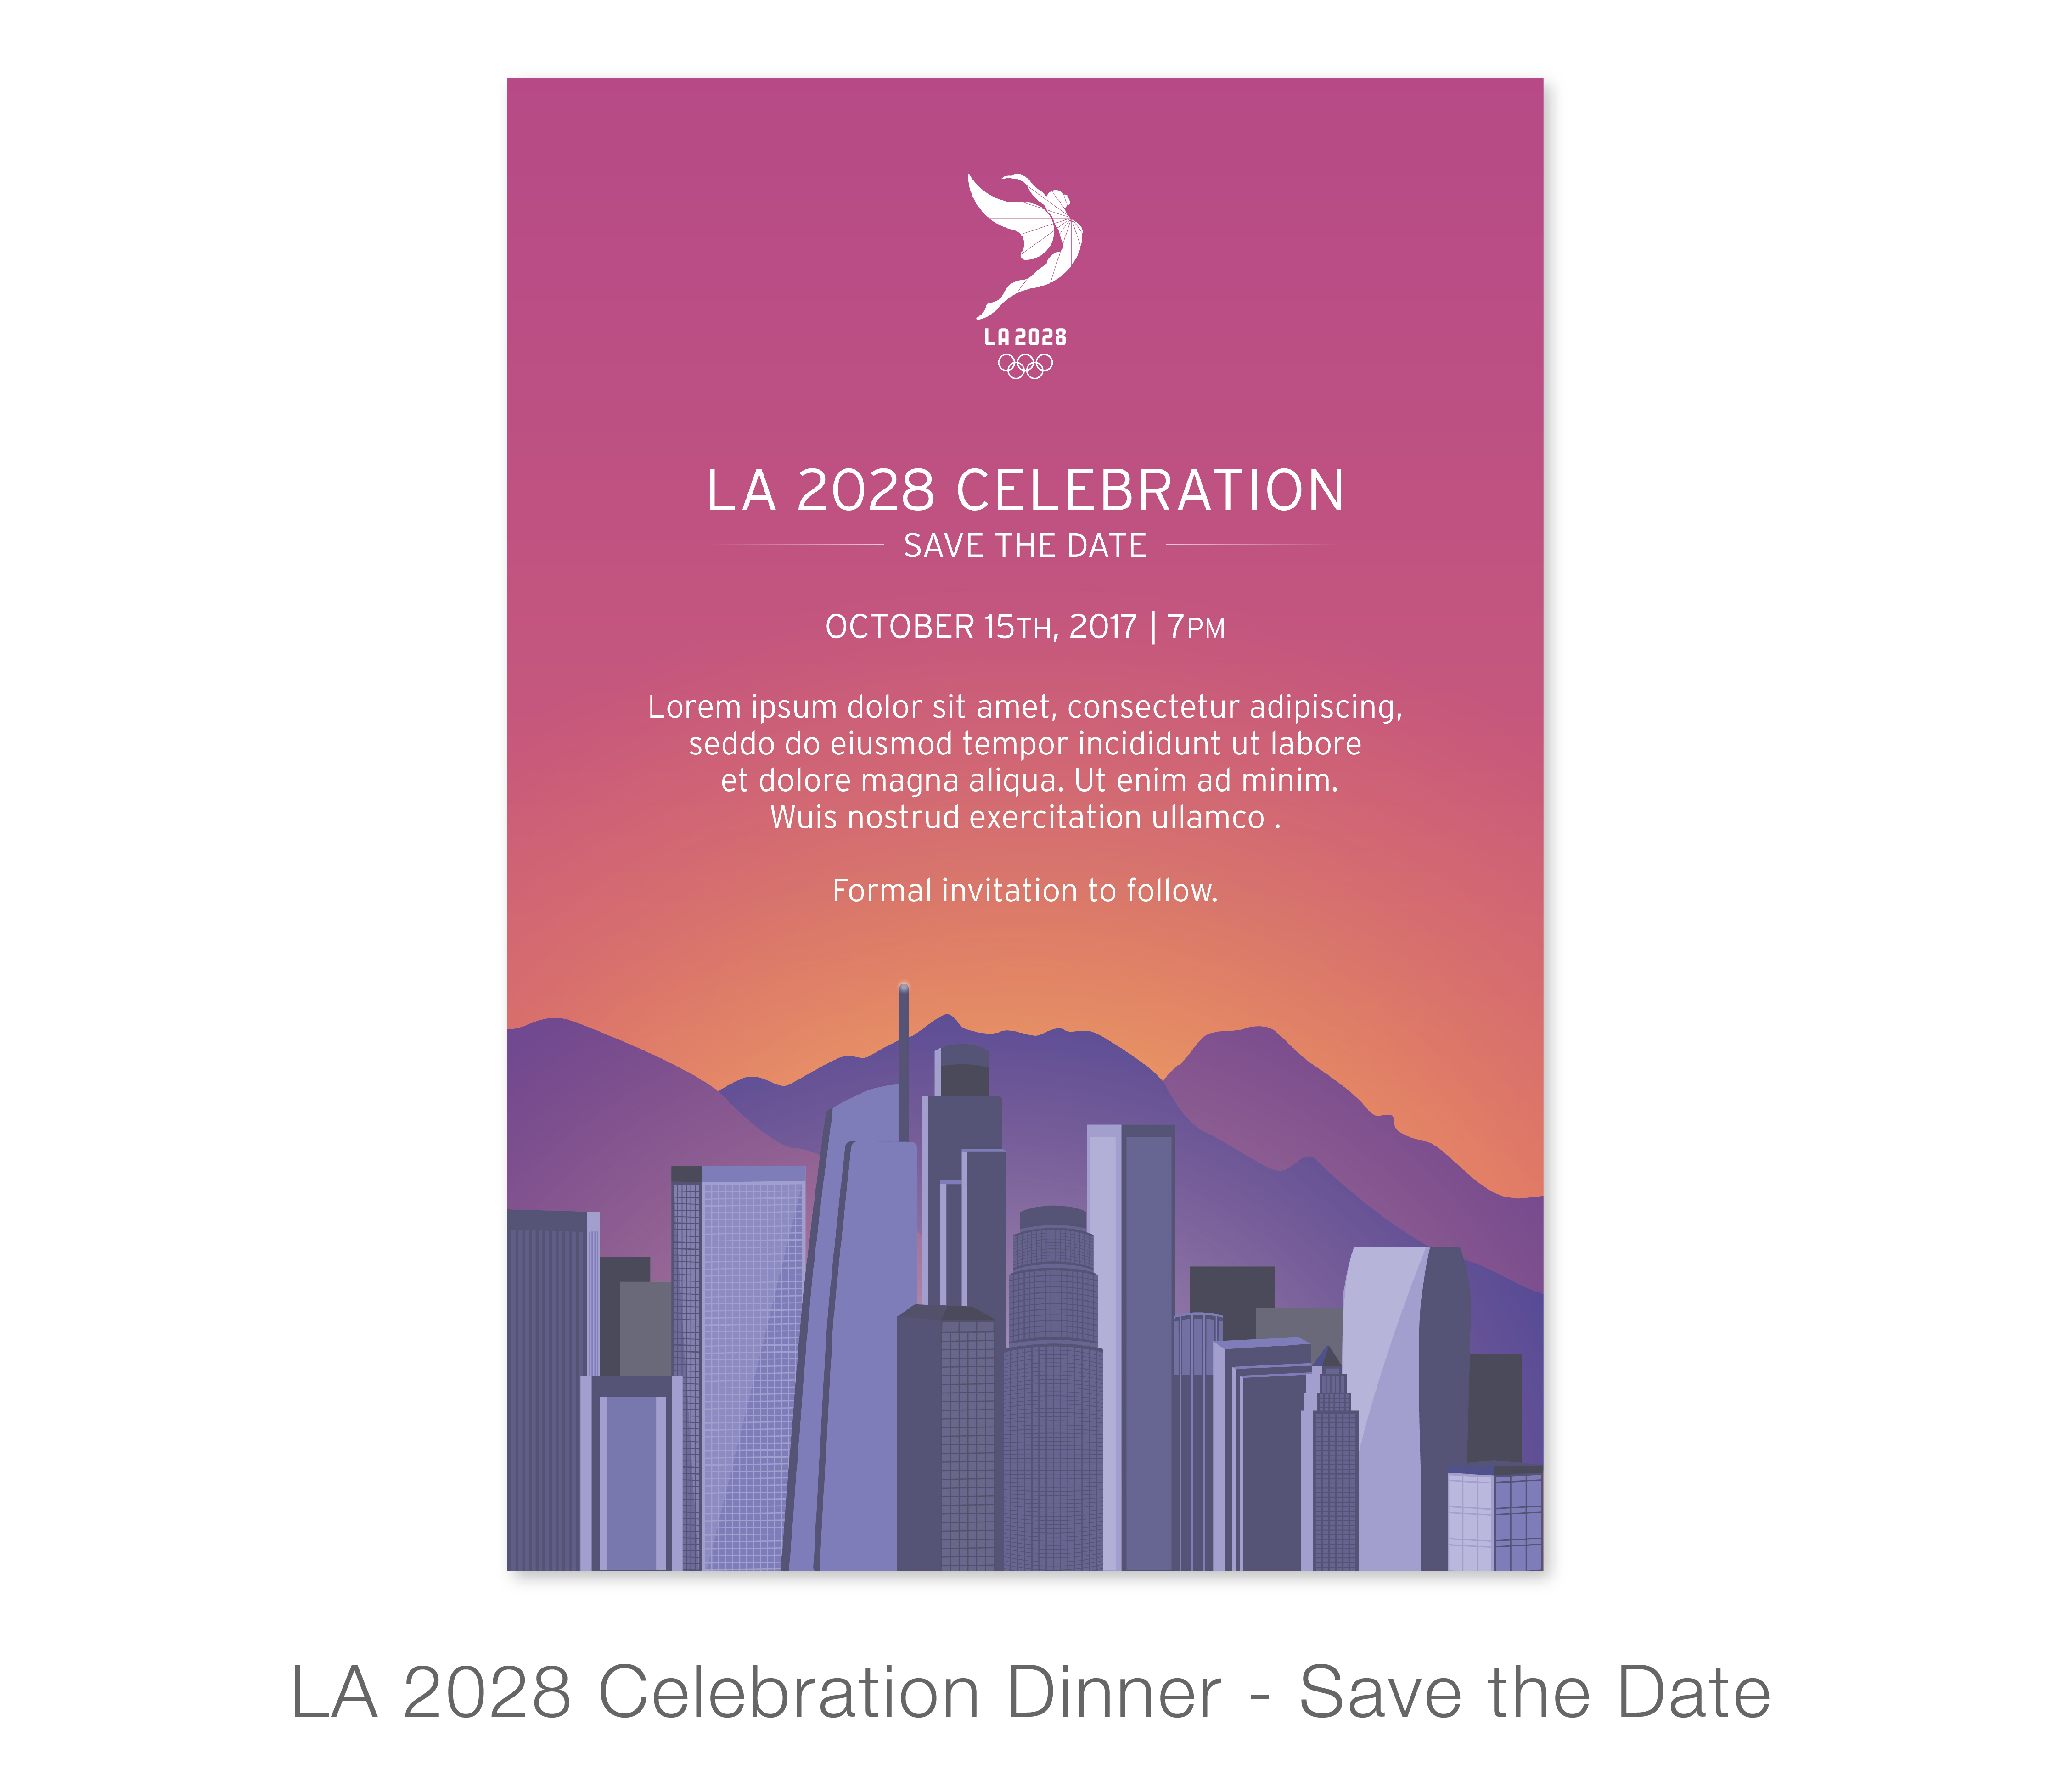 LA2028 Celebration Dinner Save the Date